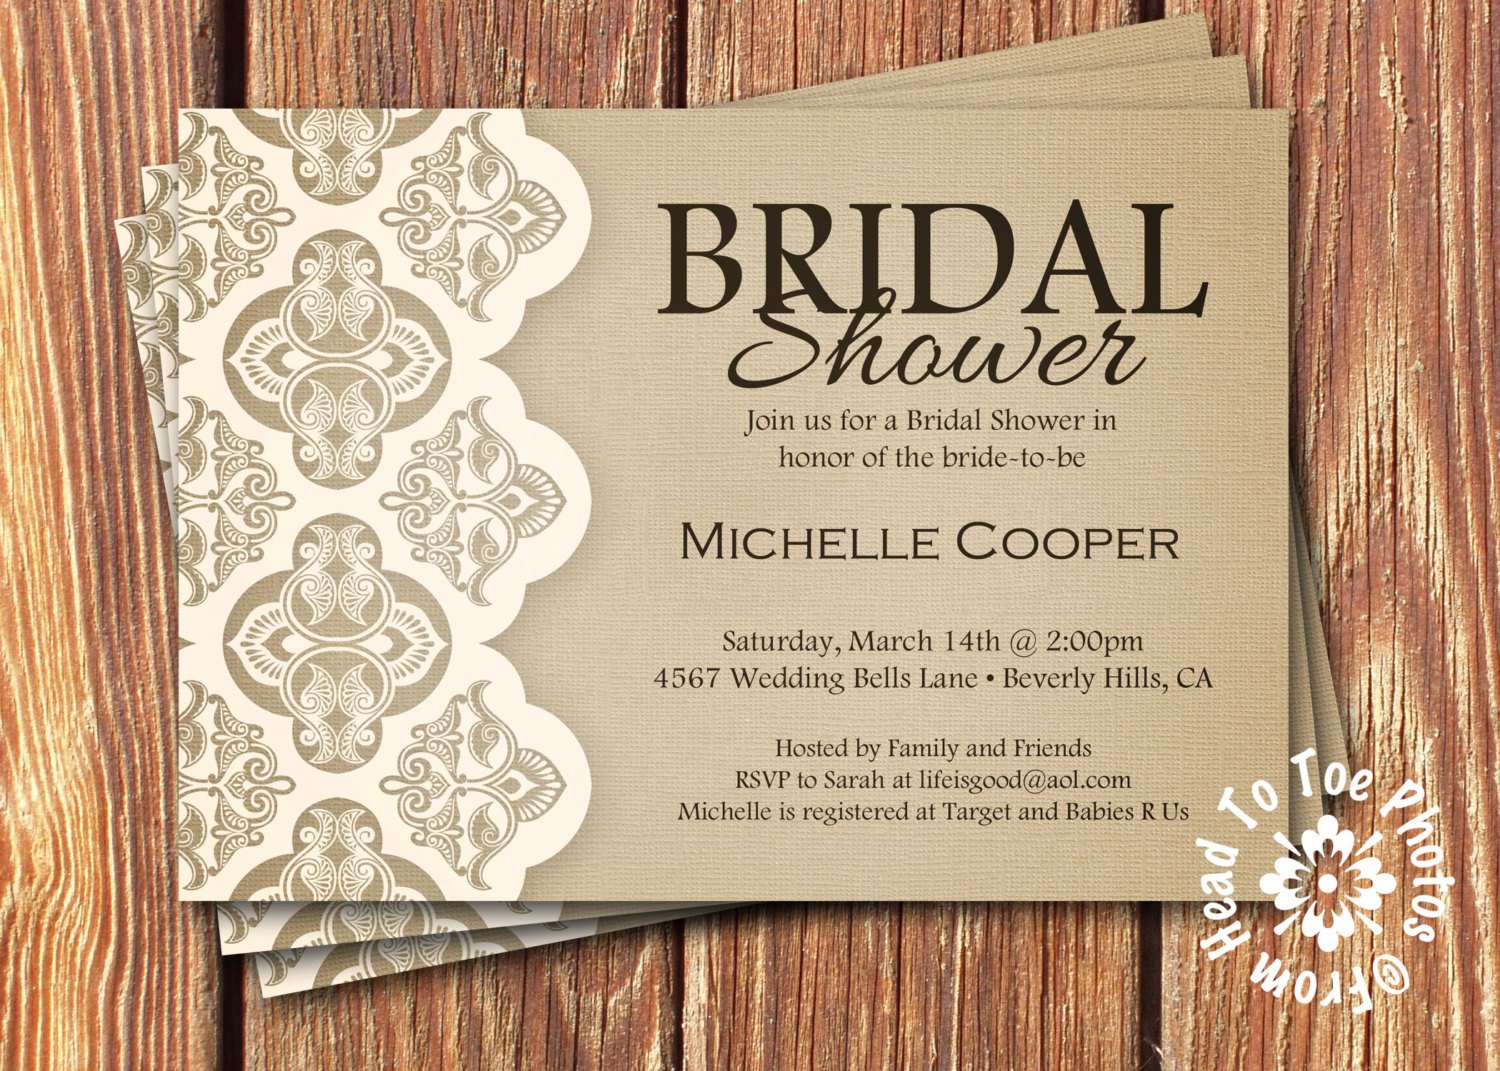 Bridal Shower Invitation Email Templates BEST HOME DESIGN IDEAS